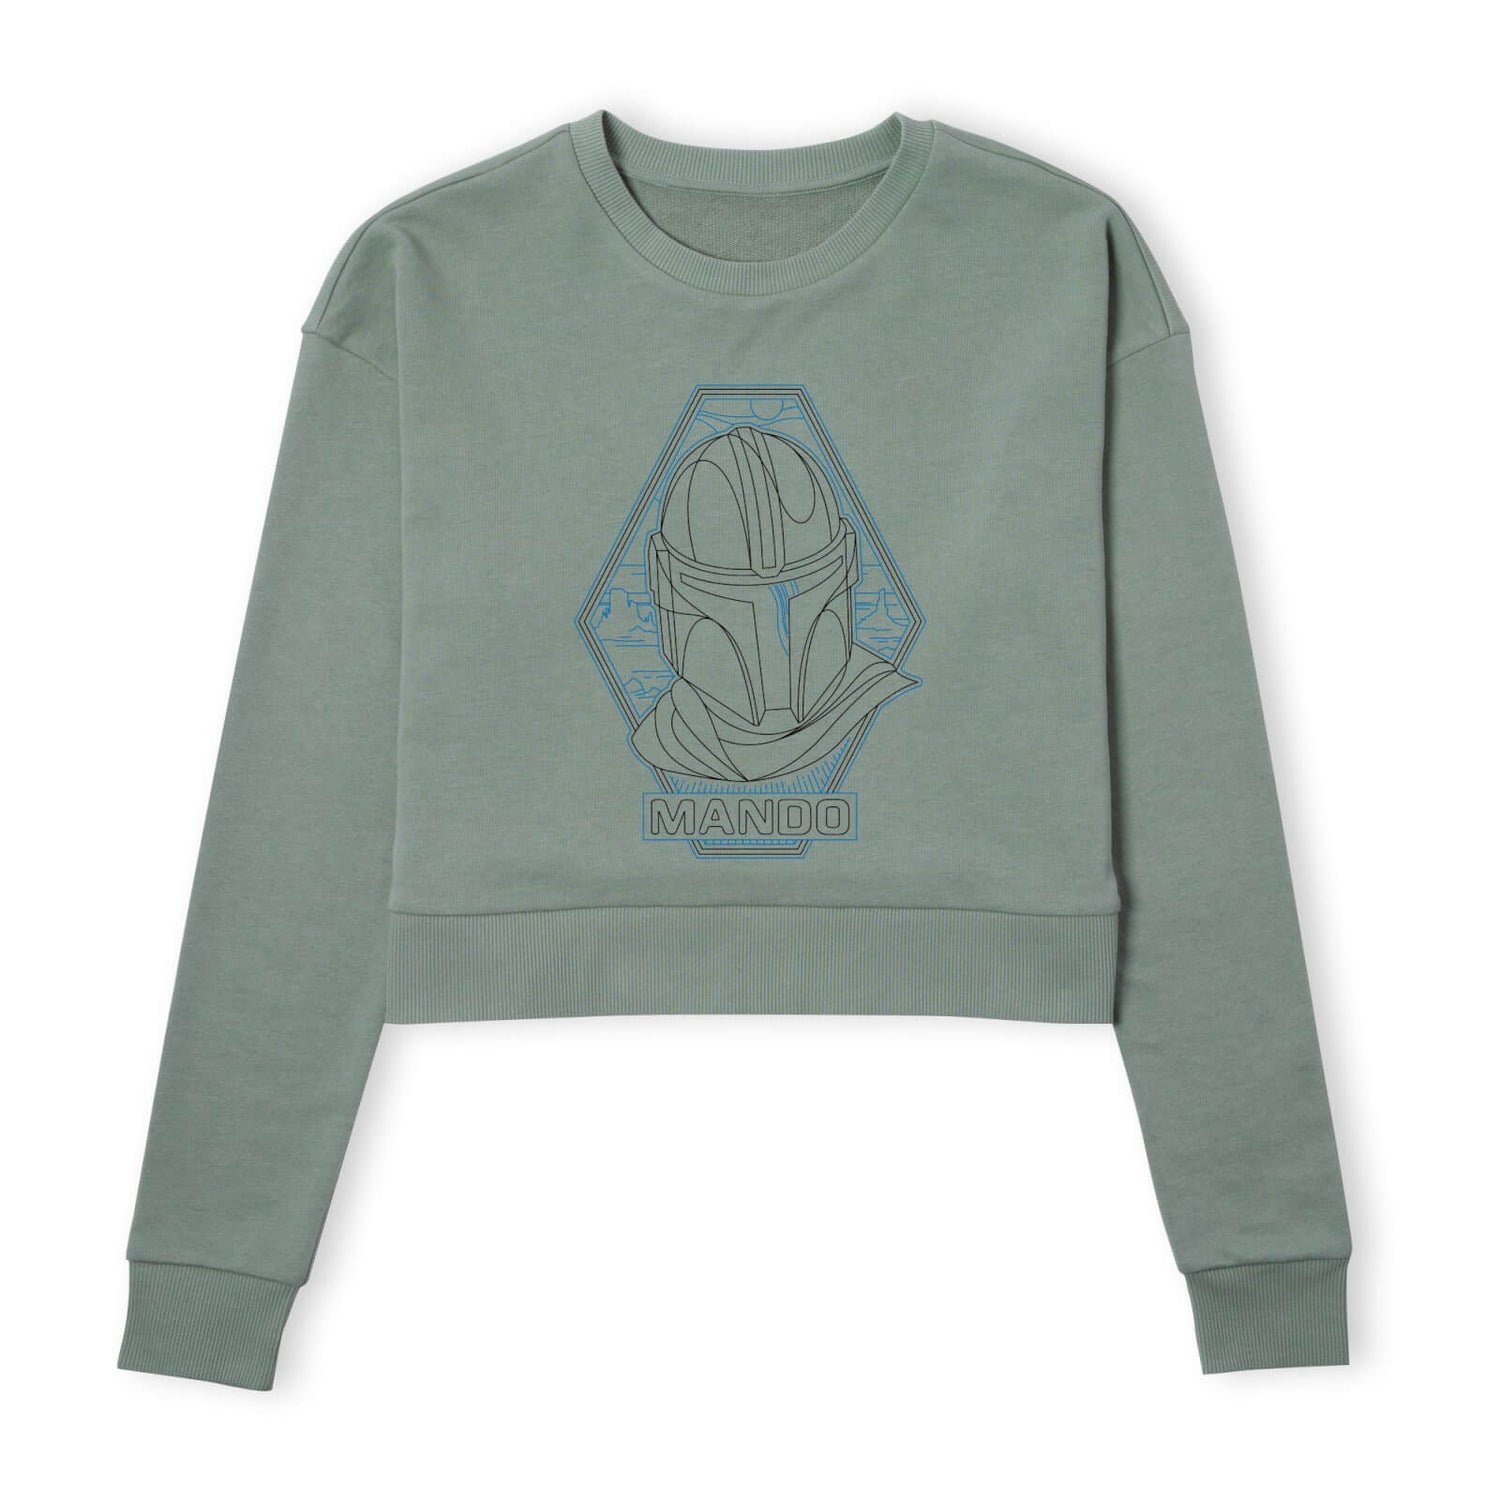 Star Wars The Mandalorian Mando Line Art Badge Women's Cropped Sweatshirt - Khaki